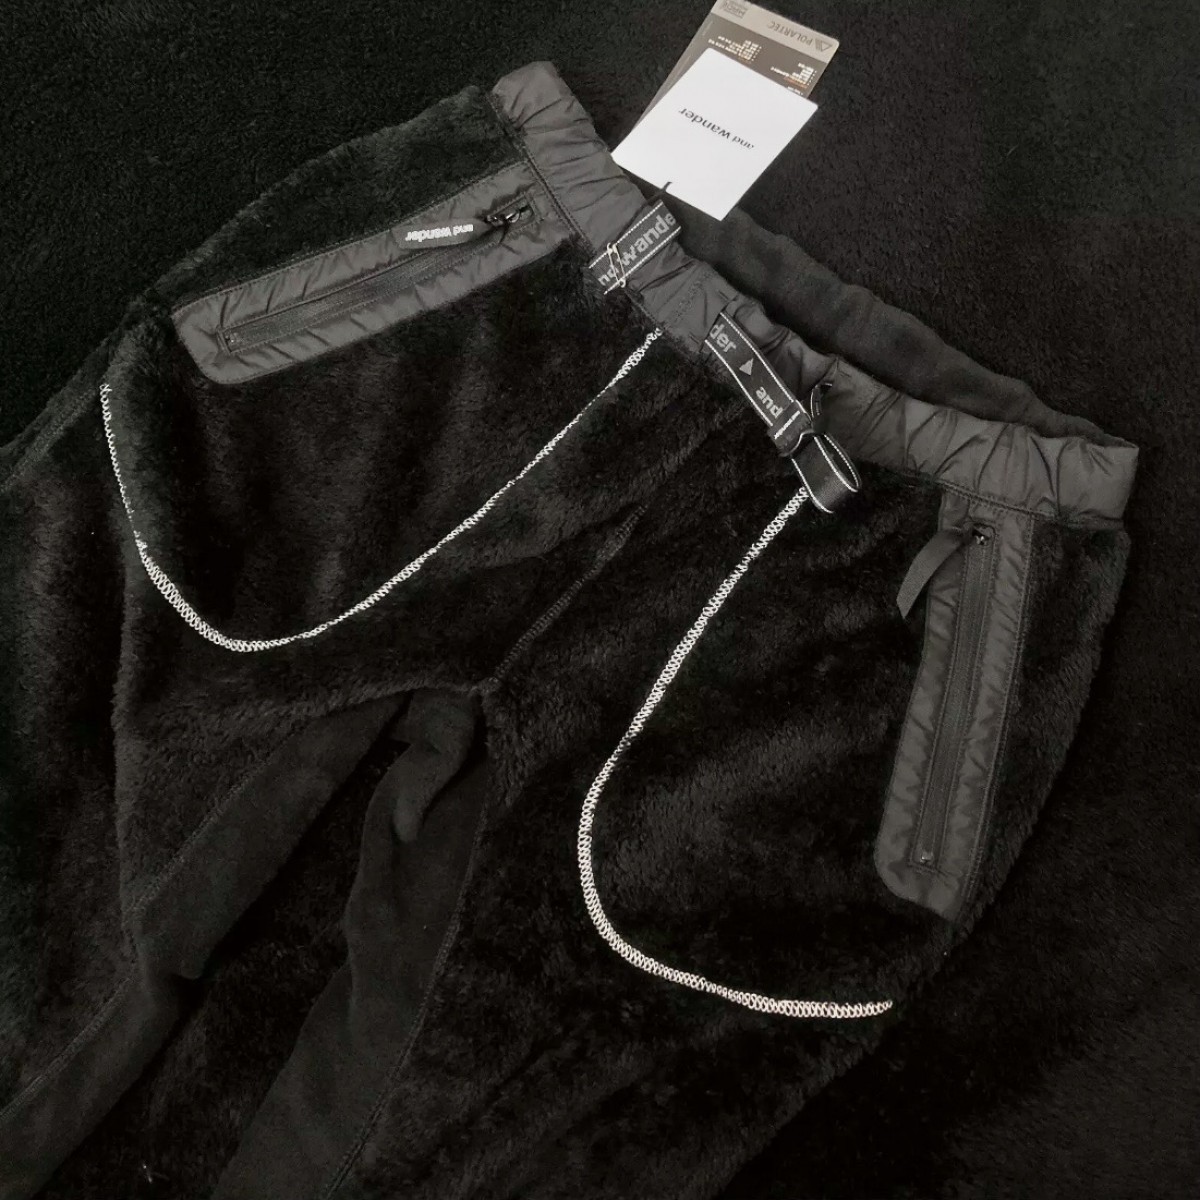 High Loft Fleece Polartec Joggers Trousers in Black size 3 - 3